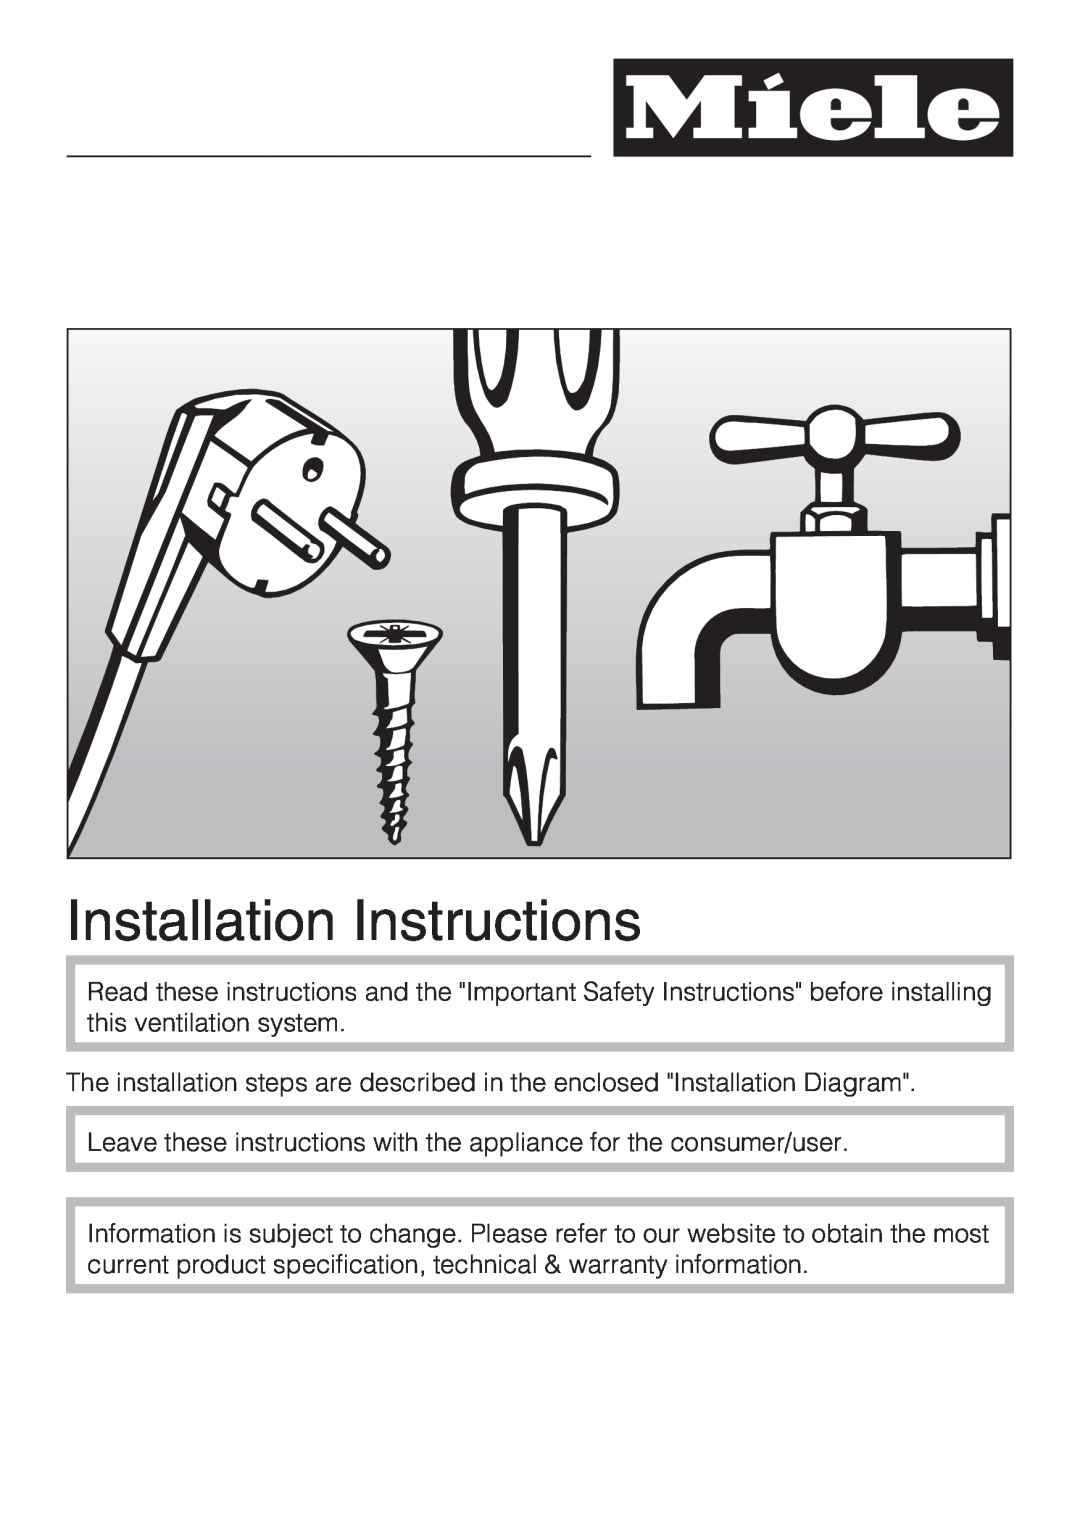 Miele DA 390-5 installation instructions Installation Instructions 